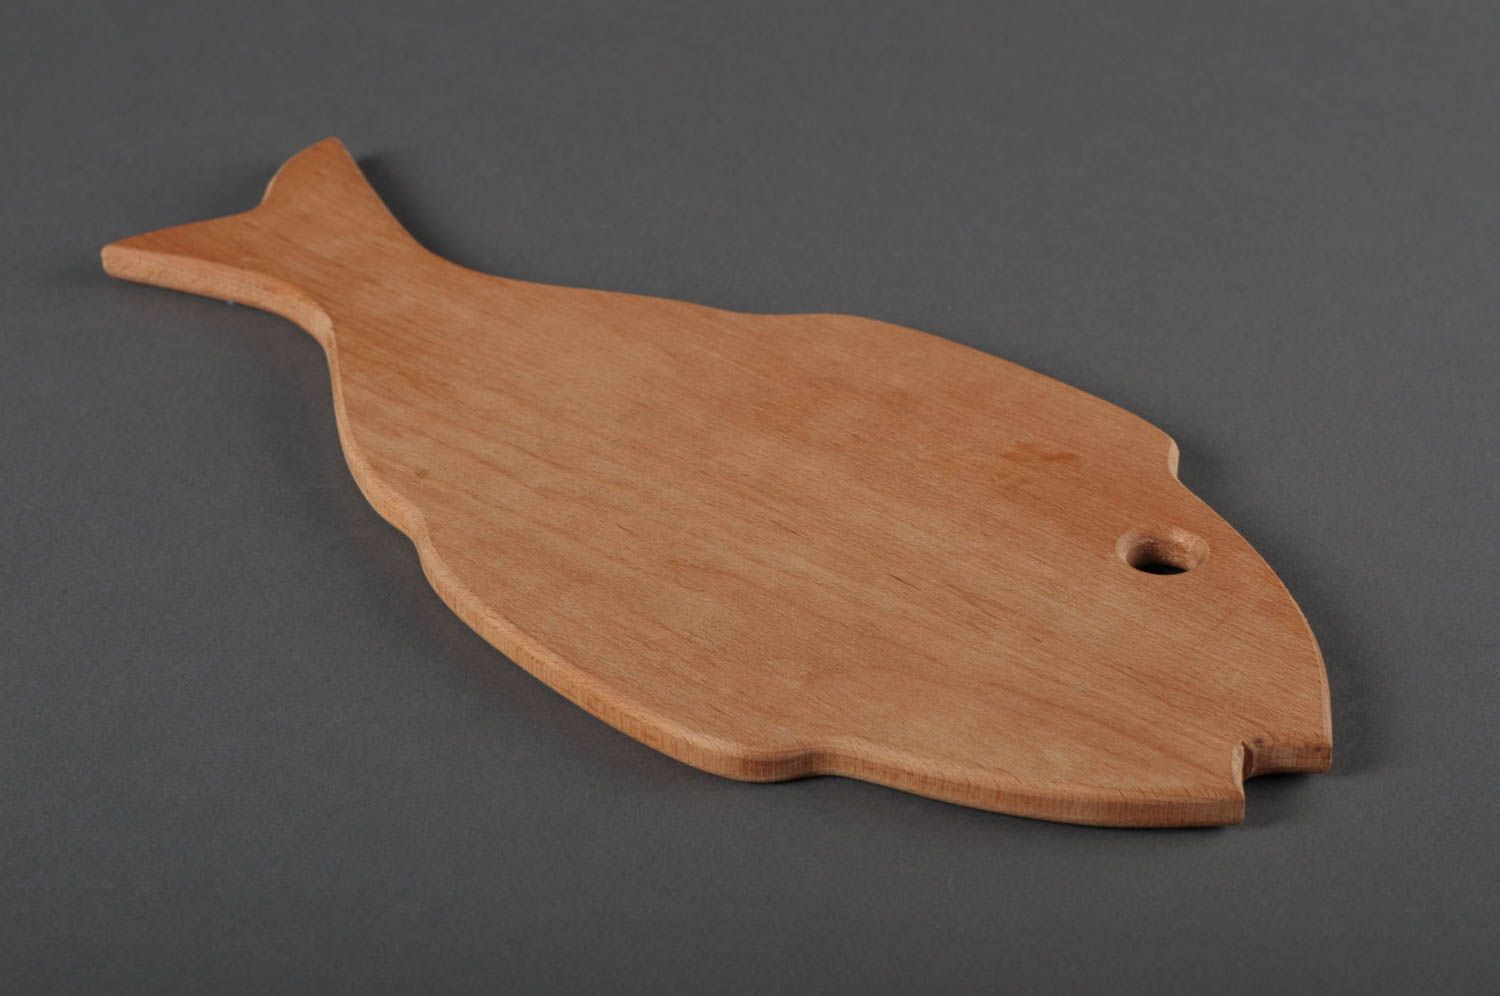 Handmade wooden chopping board cutting board wood craft kitchen supplies photo 2